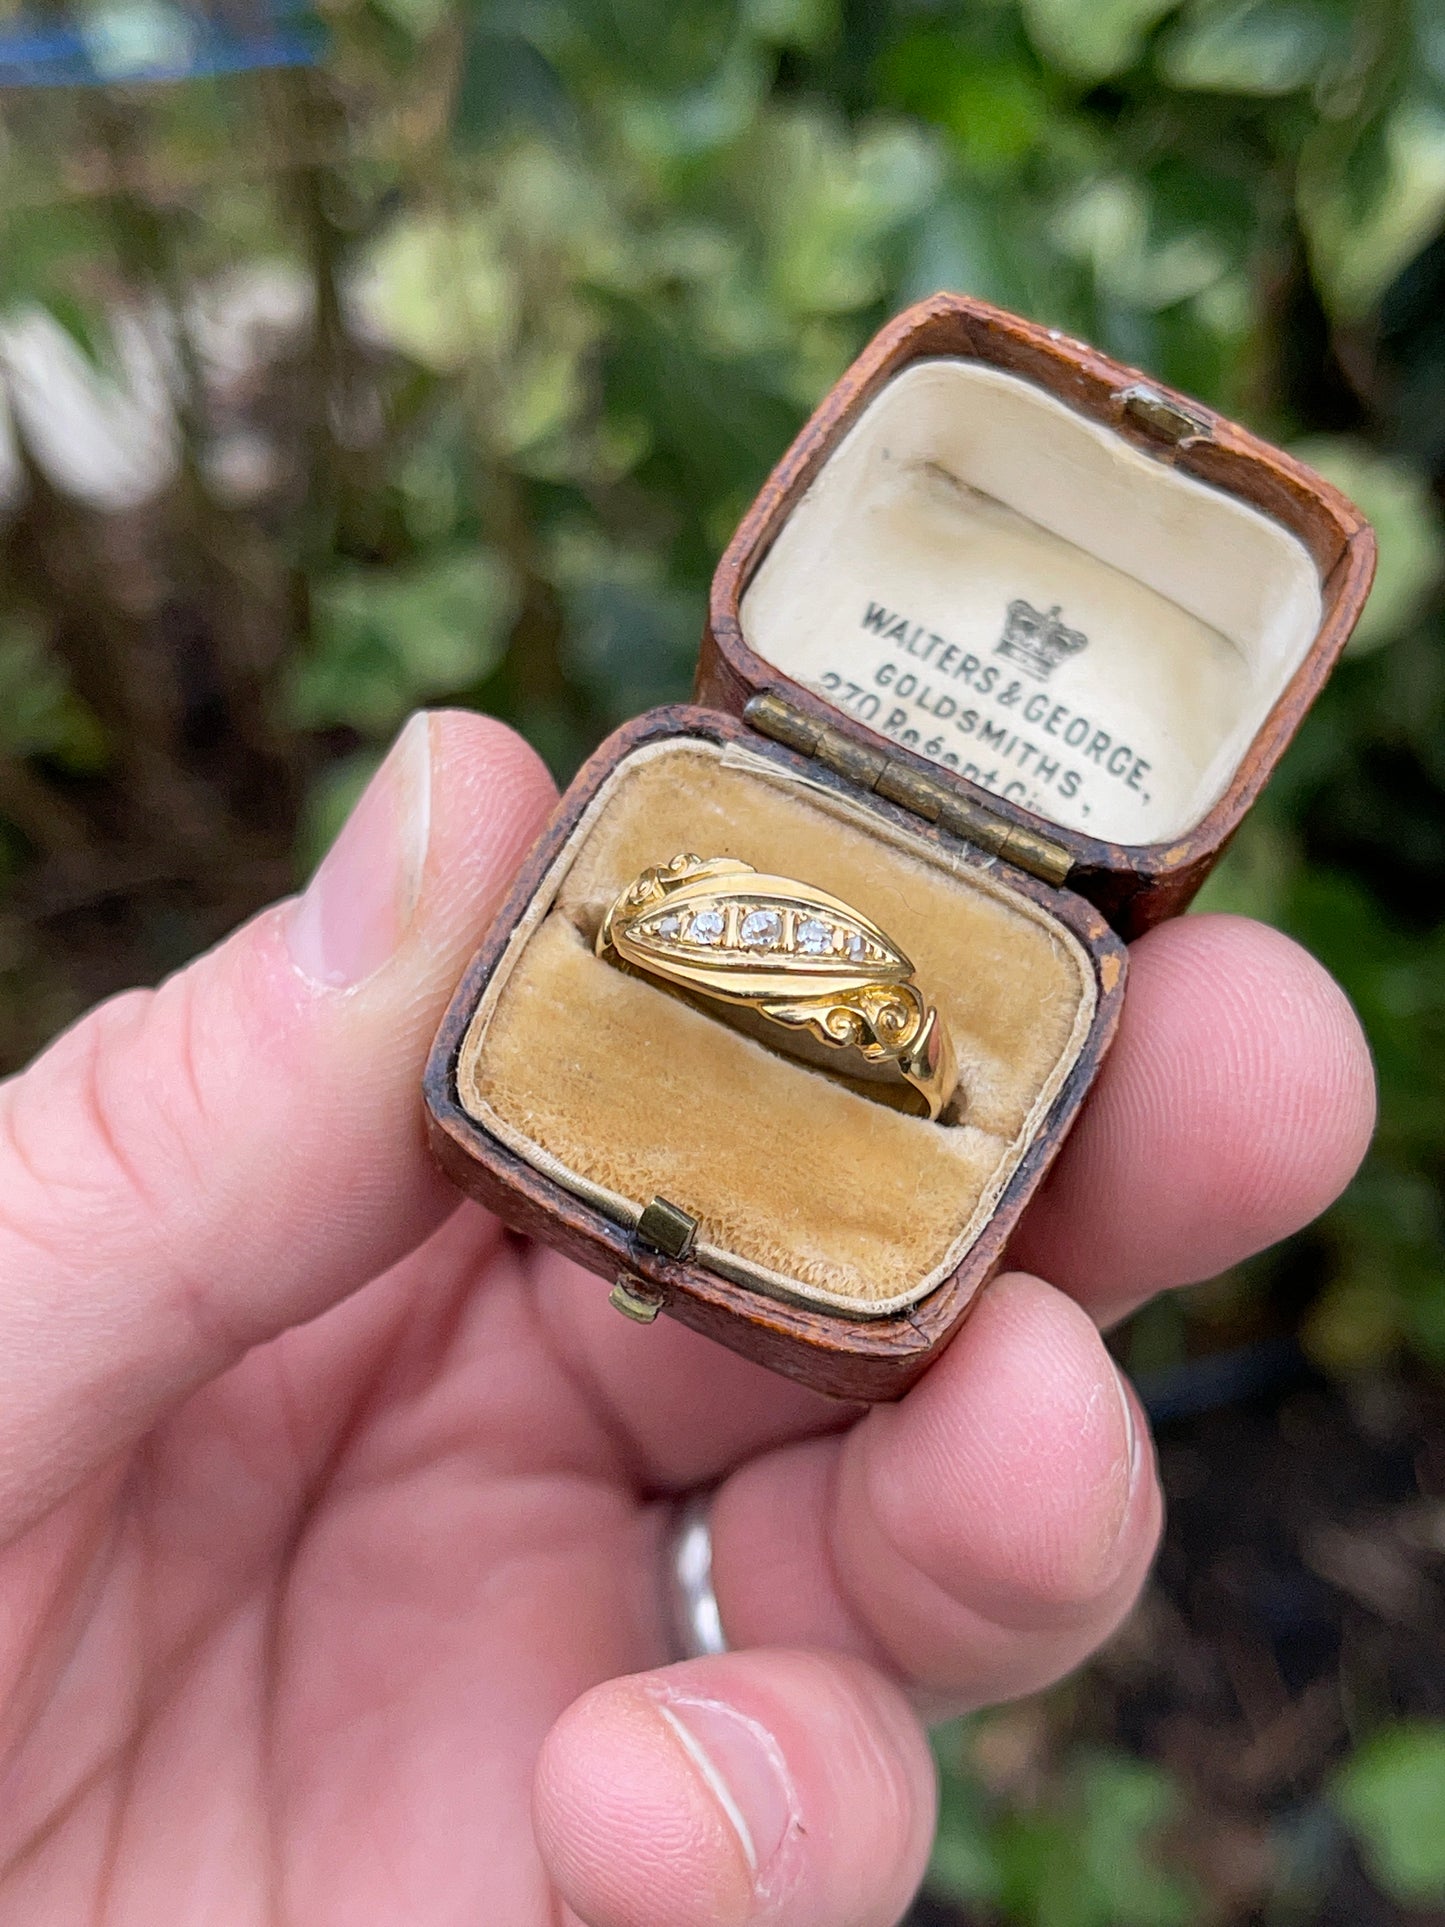 Edwardian Diamond Gypsy Ring (c.1906; 18ct gold)